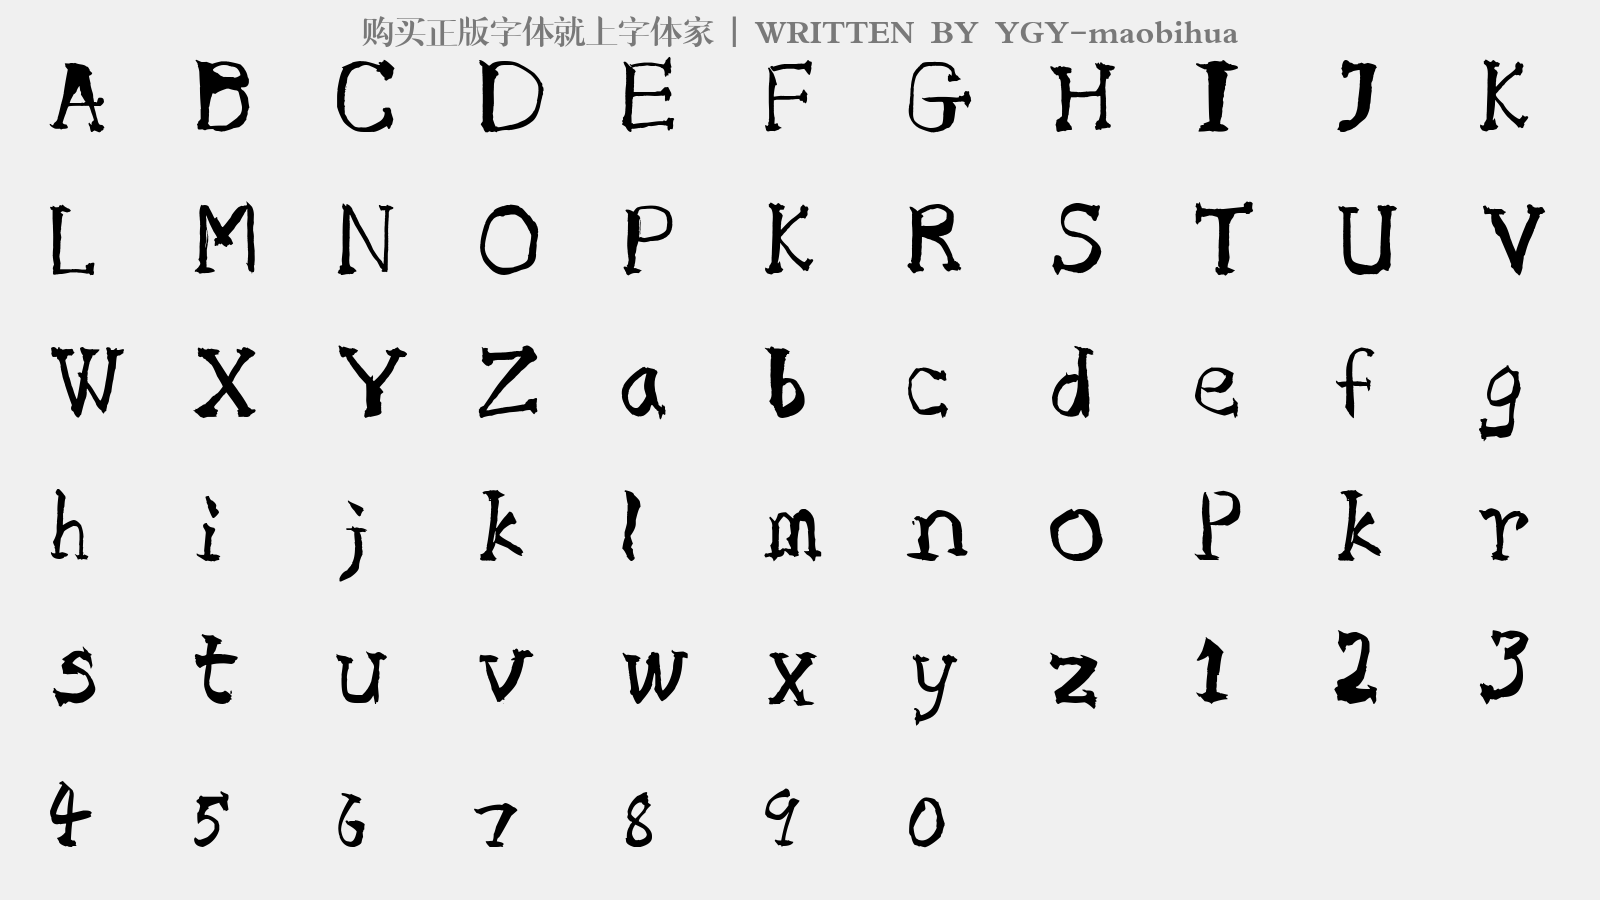 YGY-maobihua - 大写字母/小写字母/数字